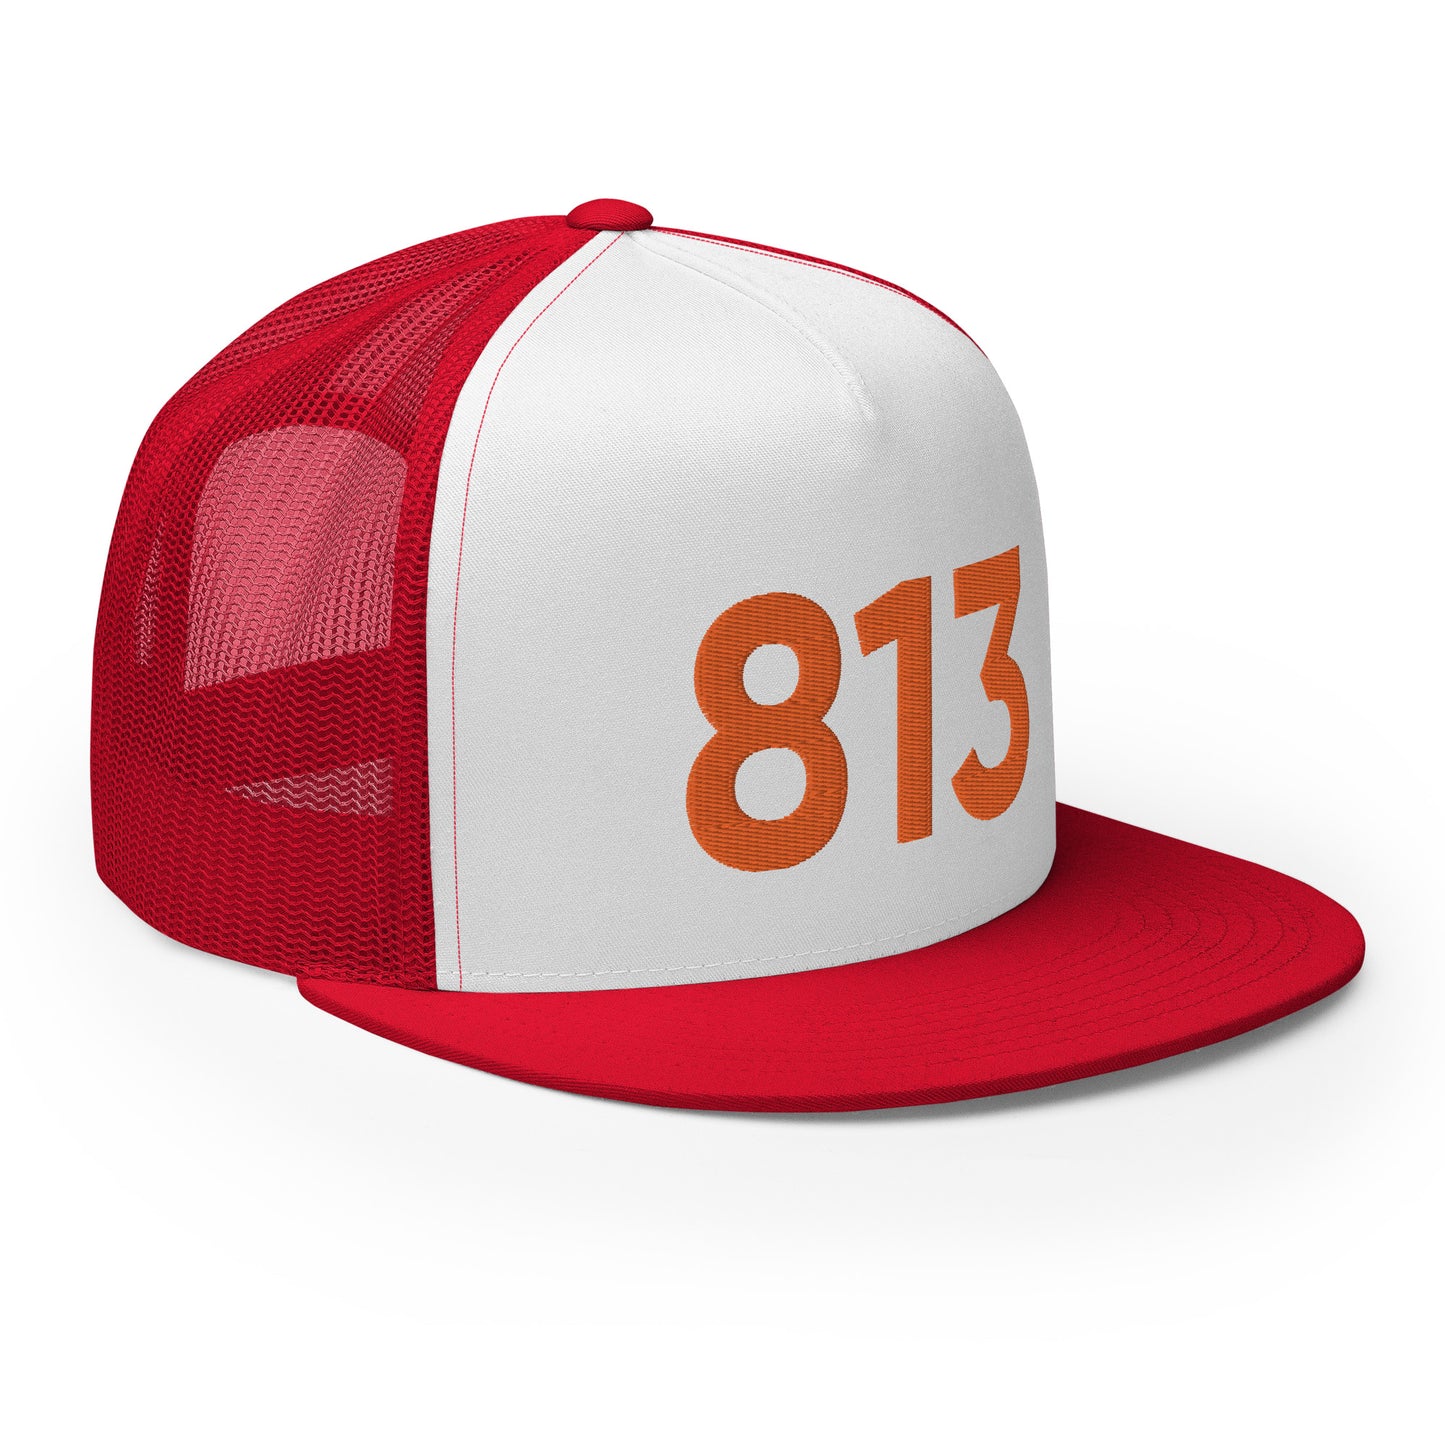 813 Tampa Bay Nation Trucker Hat